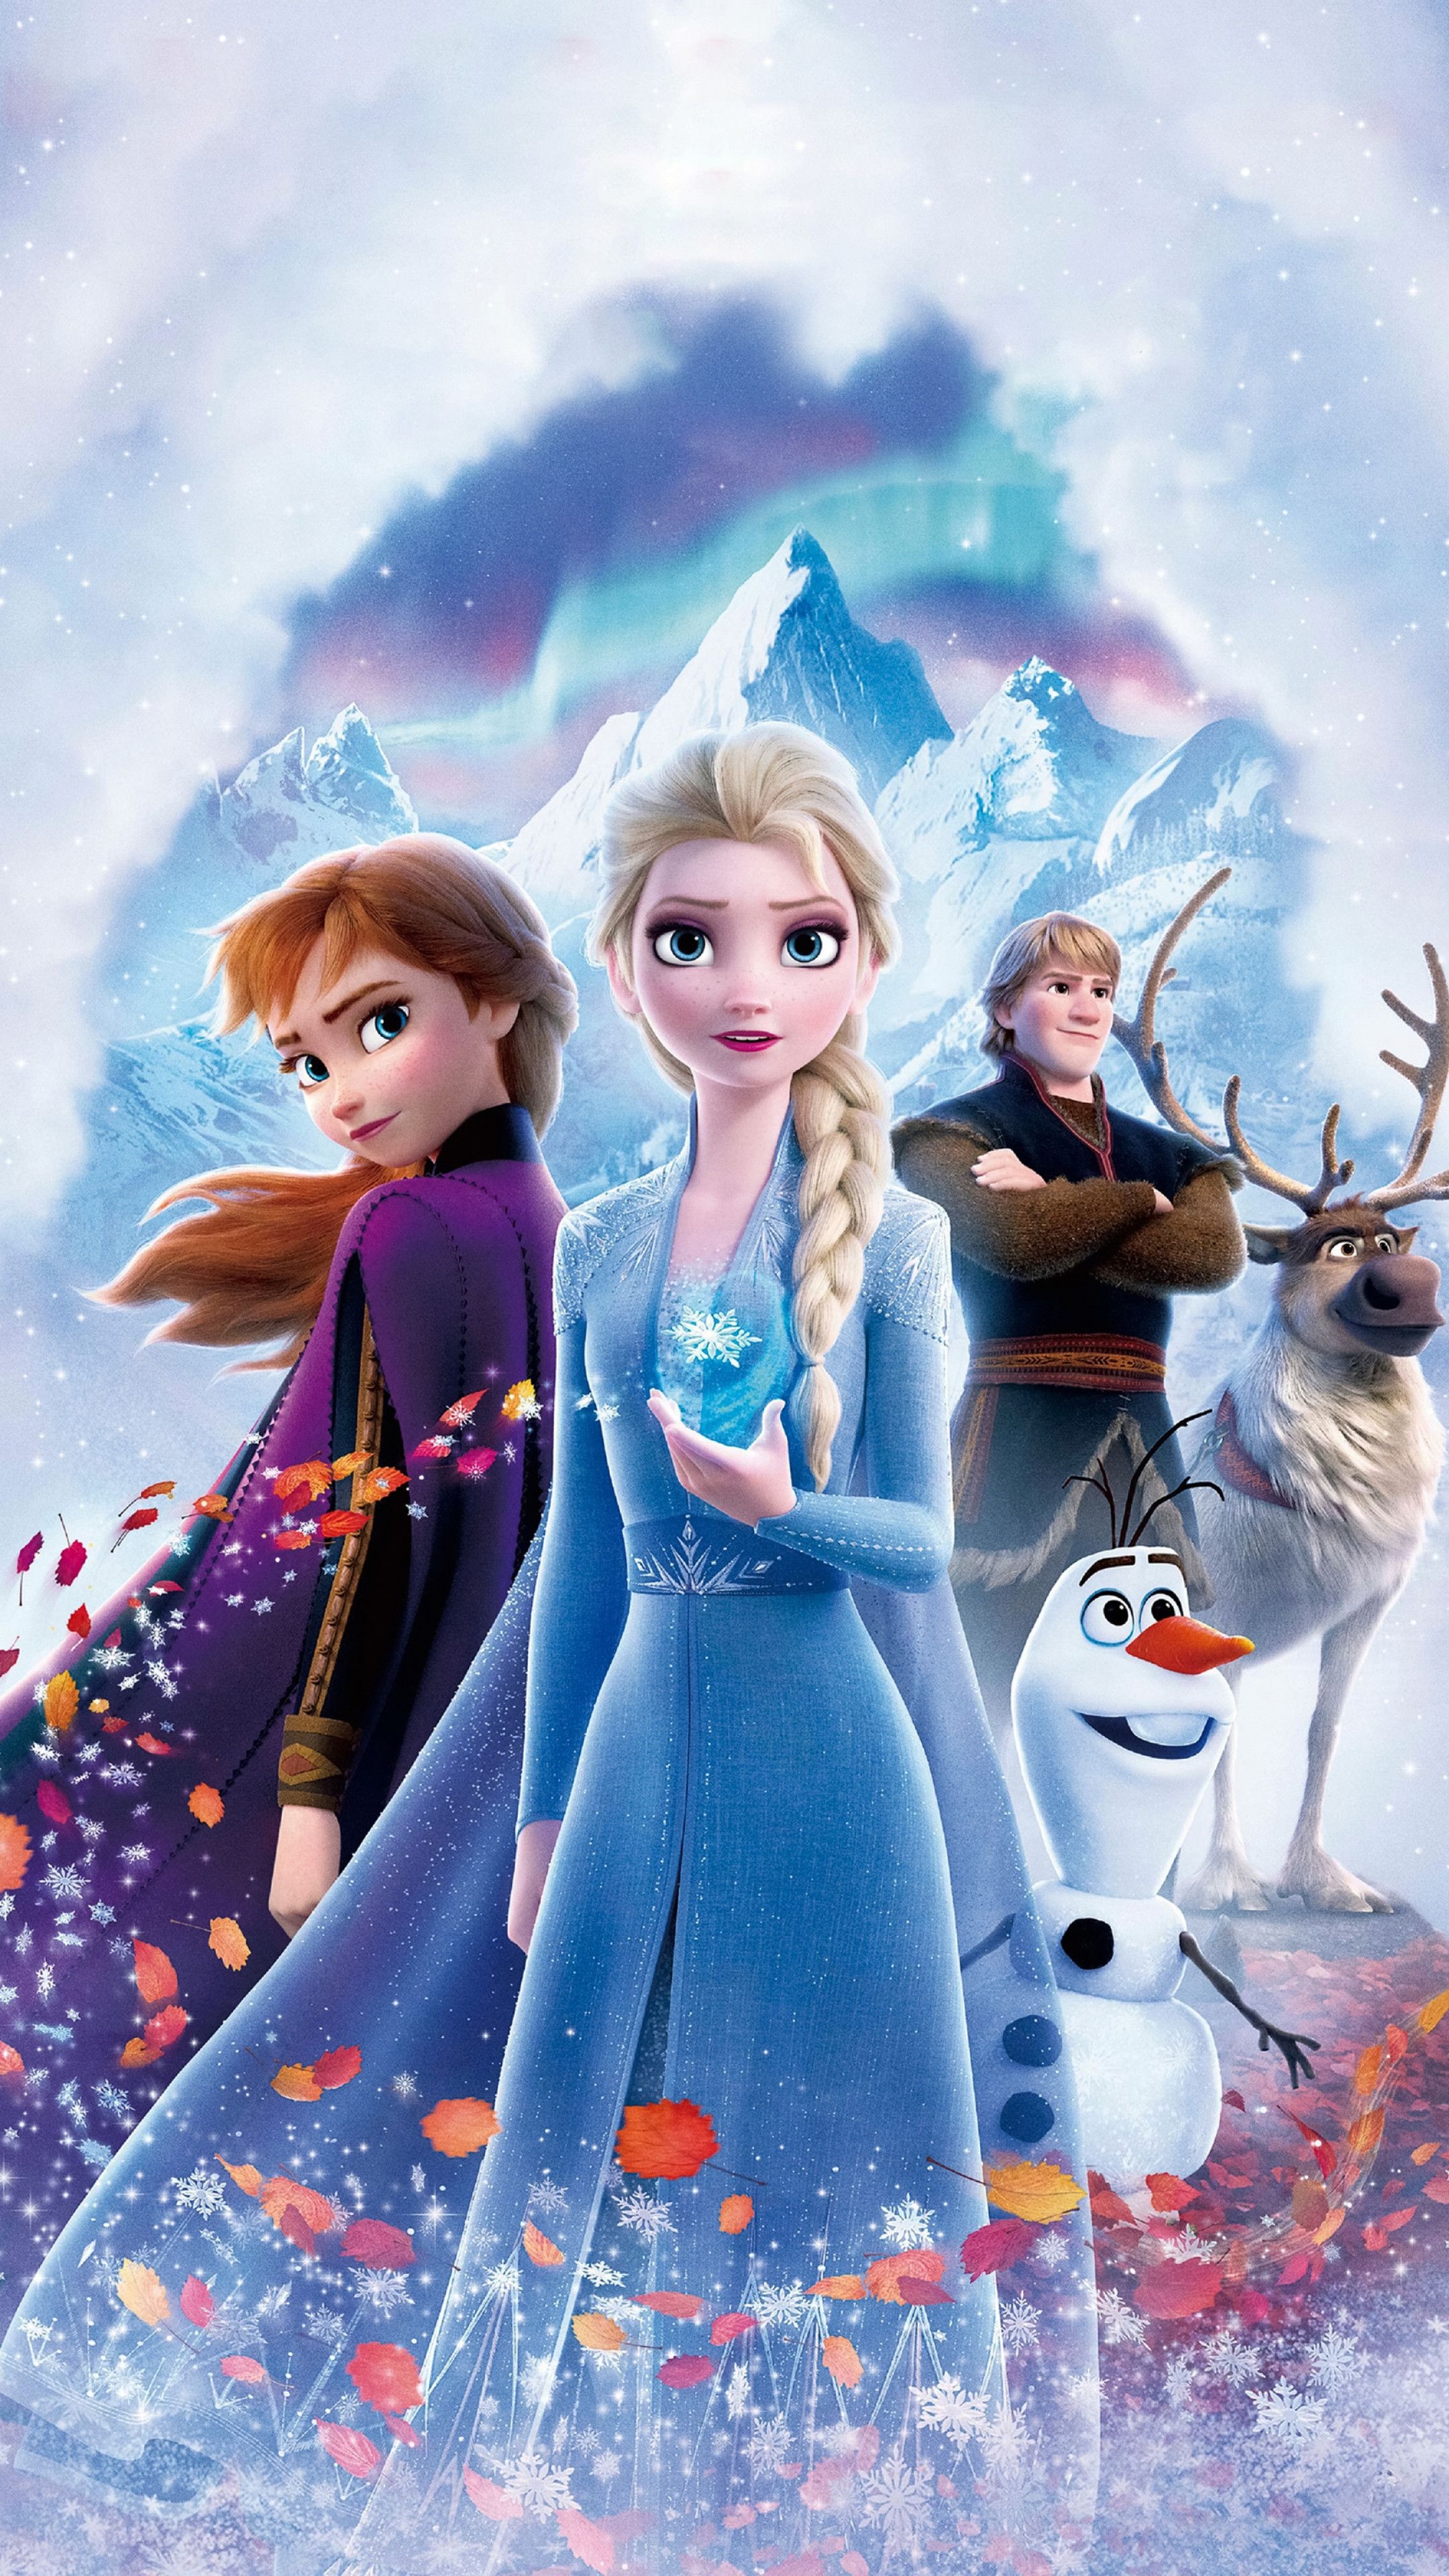 Disney Animation, Frozen 2 poster, 4K resolution, Disney princess, 2160x3840 4K Handy